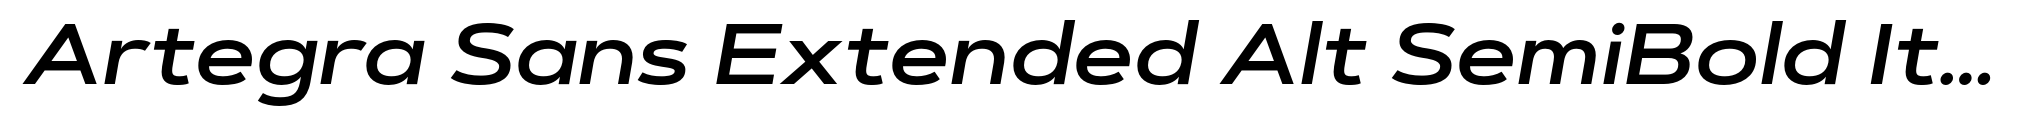 Artegra Sans Extended Alt SemiBold Italic image